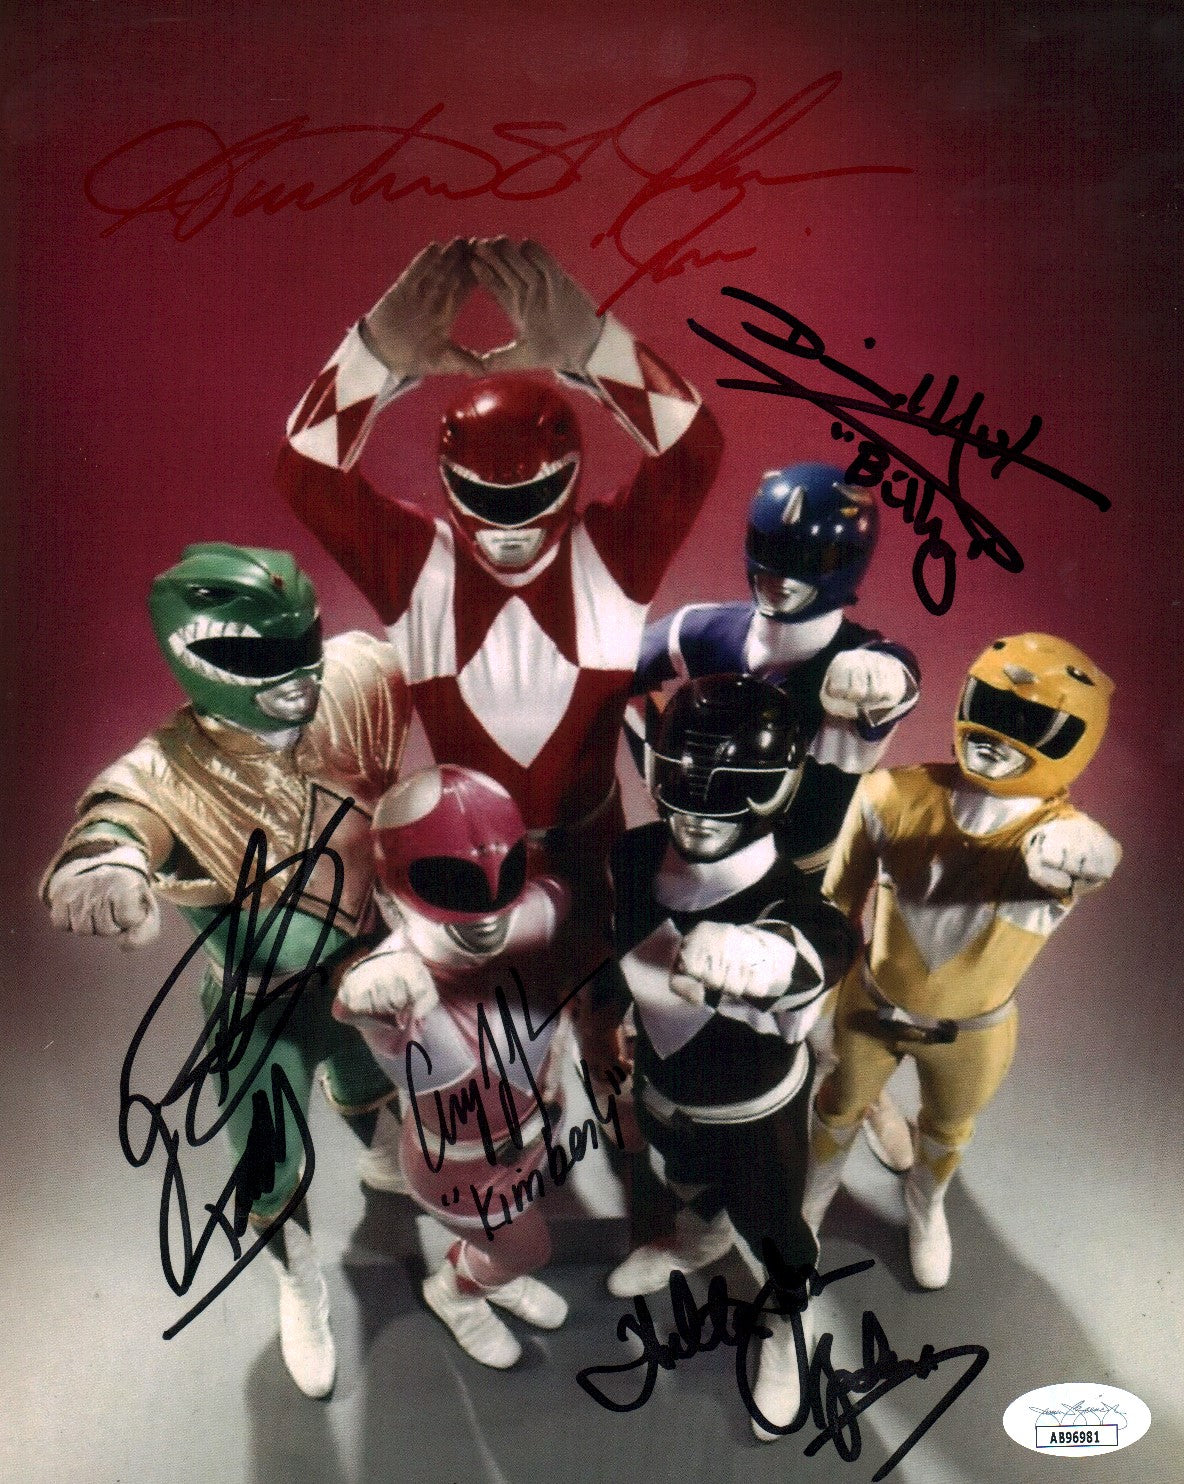 Mighty Morphin Power Rangers 8x10 Signed Photo  Cast 5x Frank, Johnson, Yost, Jones, St. John JSA Certified Autograph